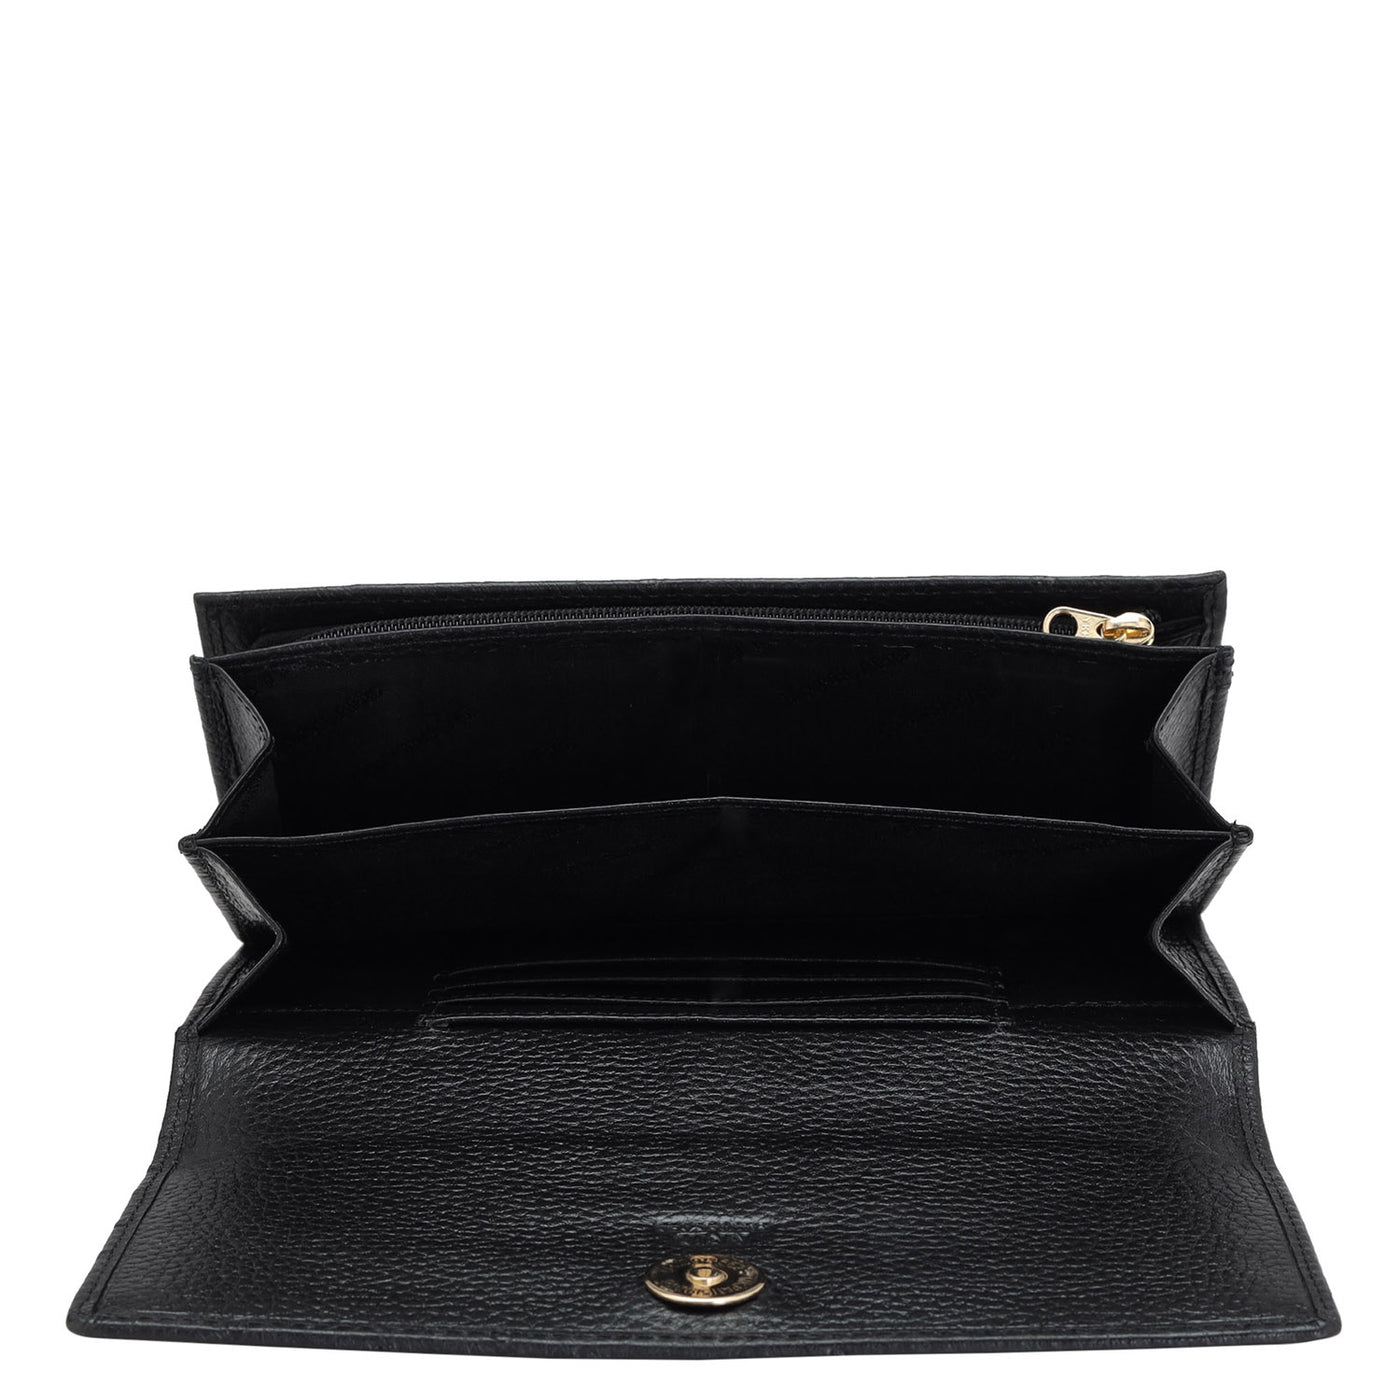 Ostrich Leather Ladies Wallet - Black